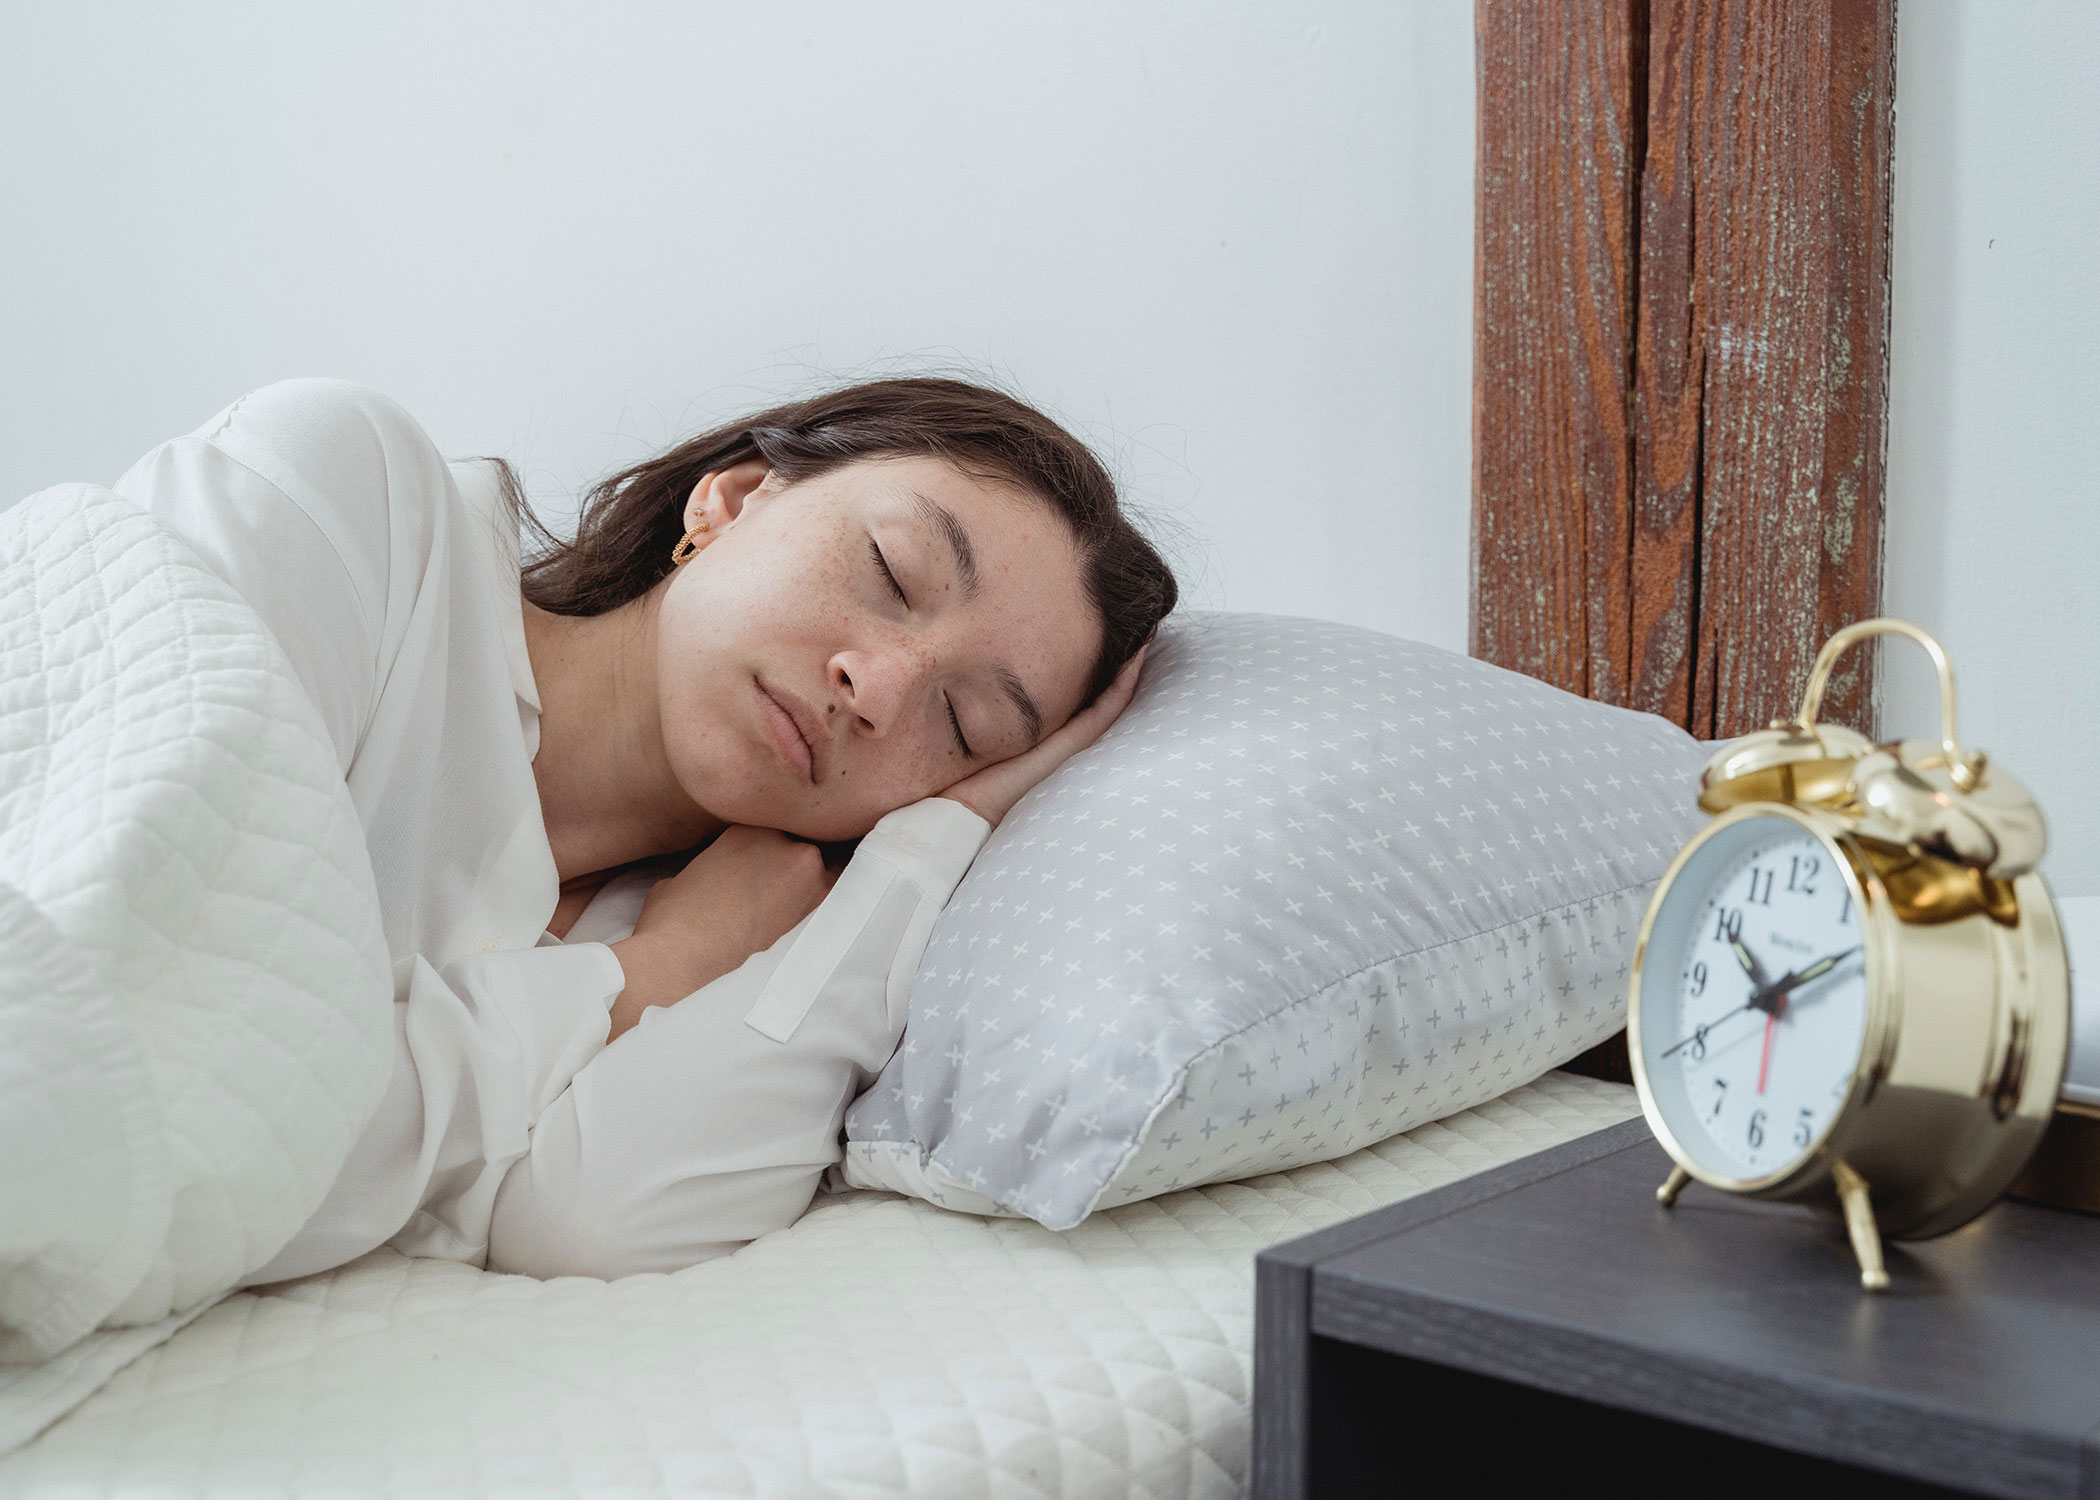 Combien d'heures de sommeil doit-on dormir?